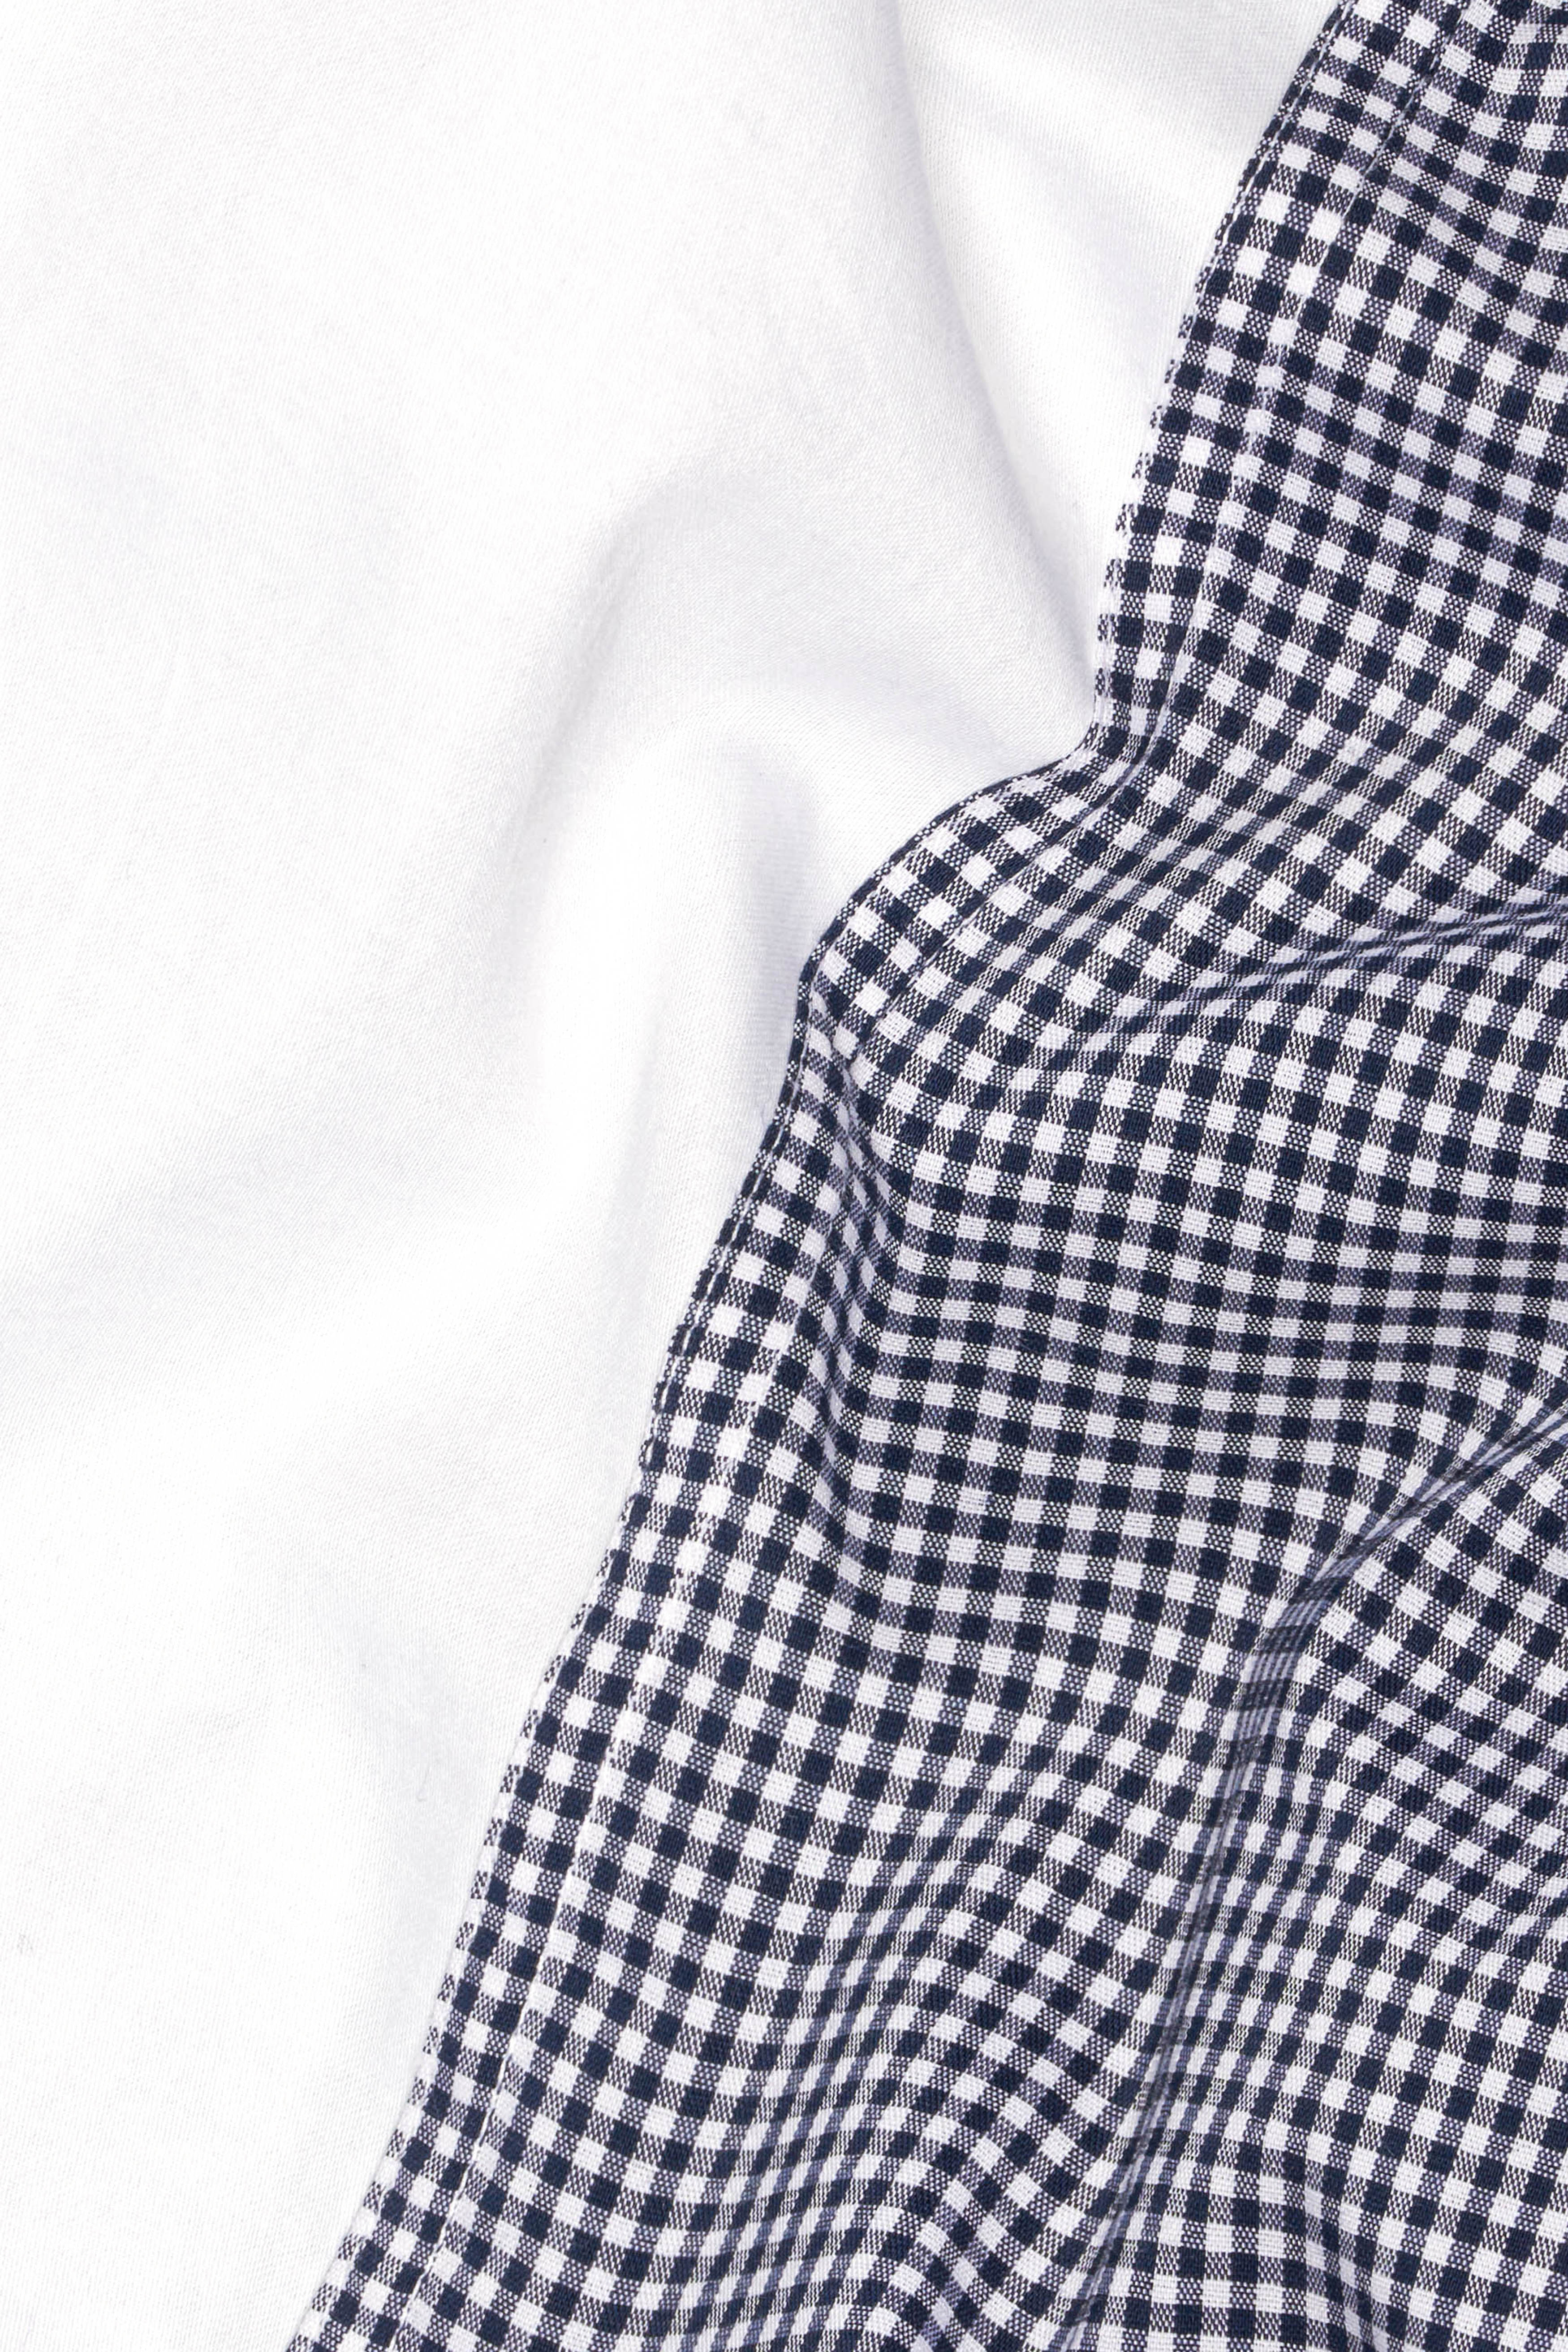 Bright White and Navy Blue Gingham Checkered Royal Oxford Designer Shirt